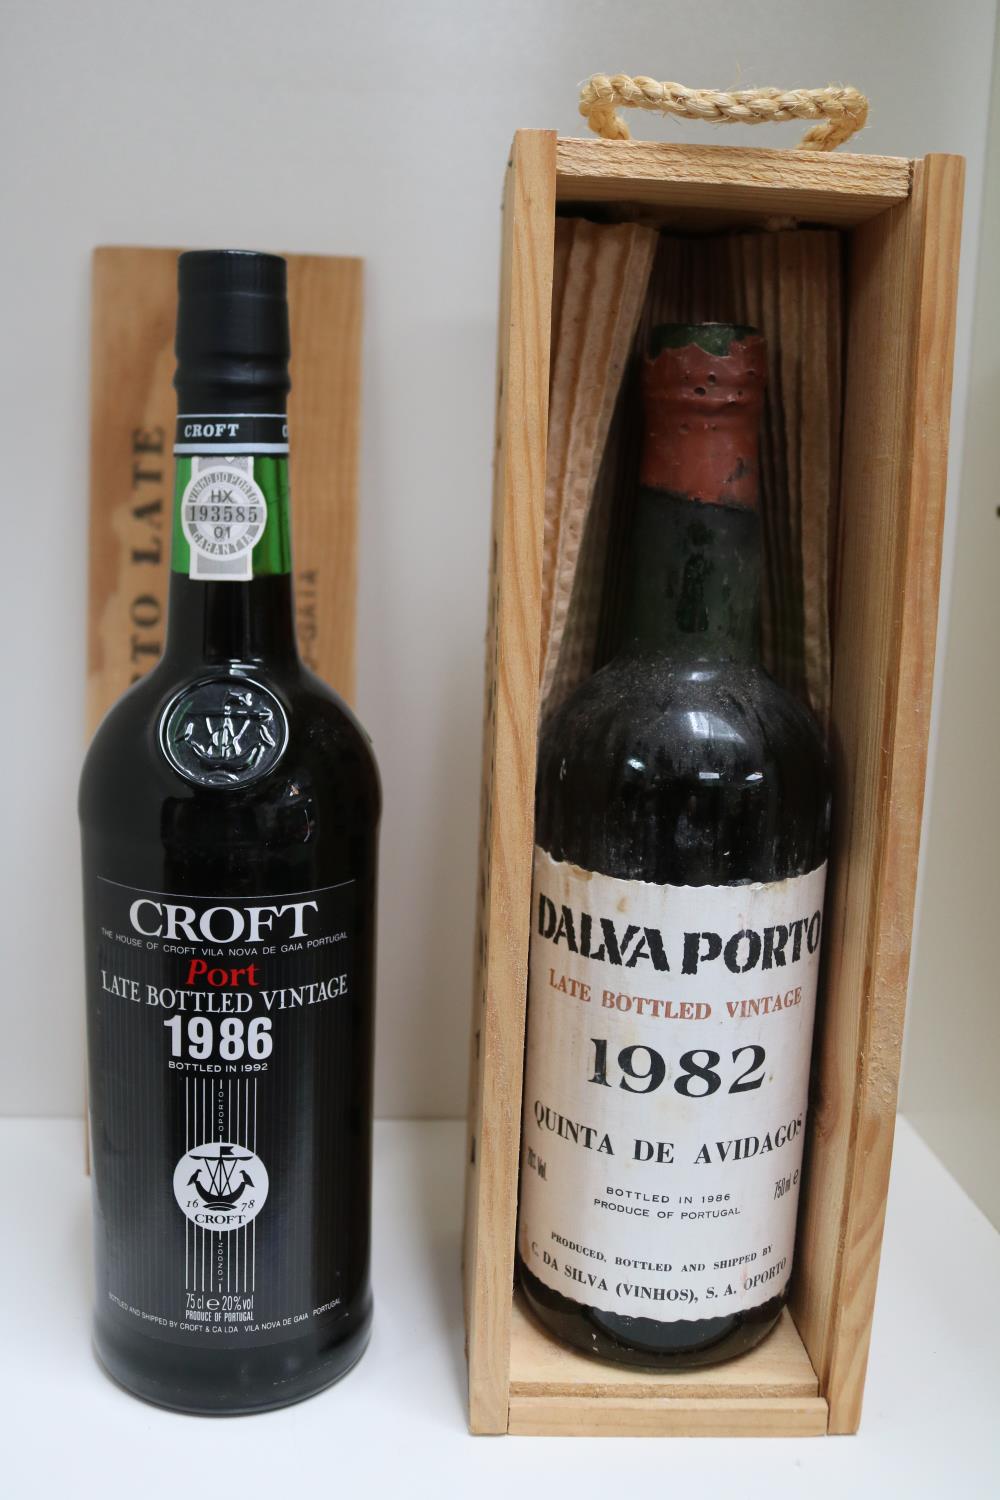 Bottle of Dalva Porto 1982 NDS 1986 Croft